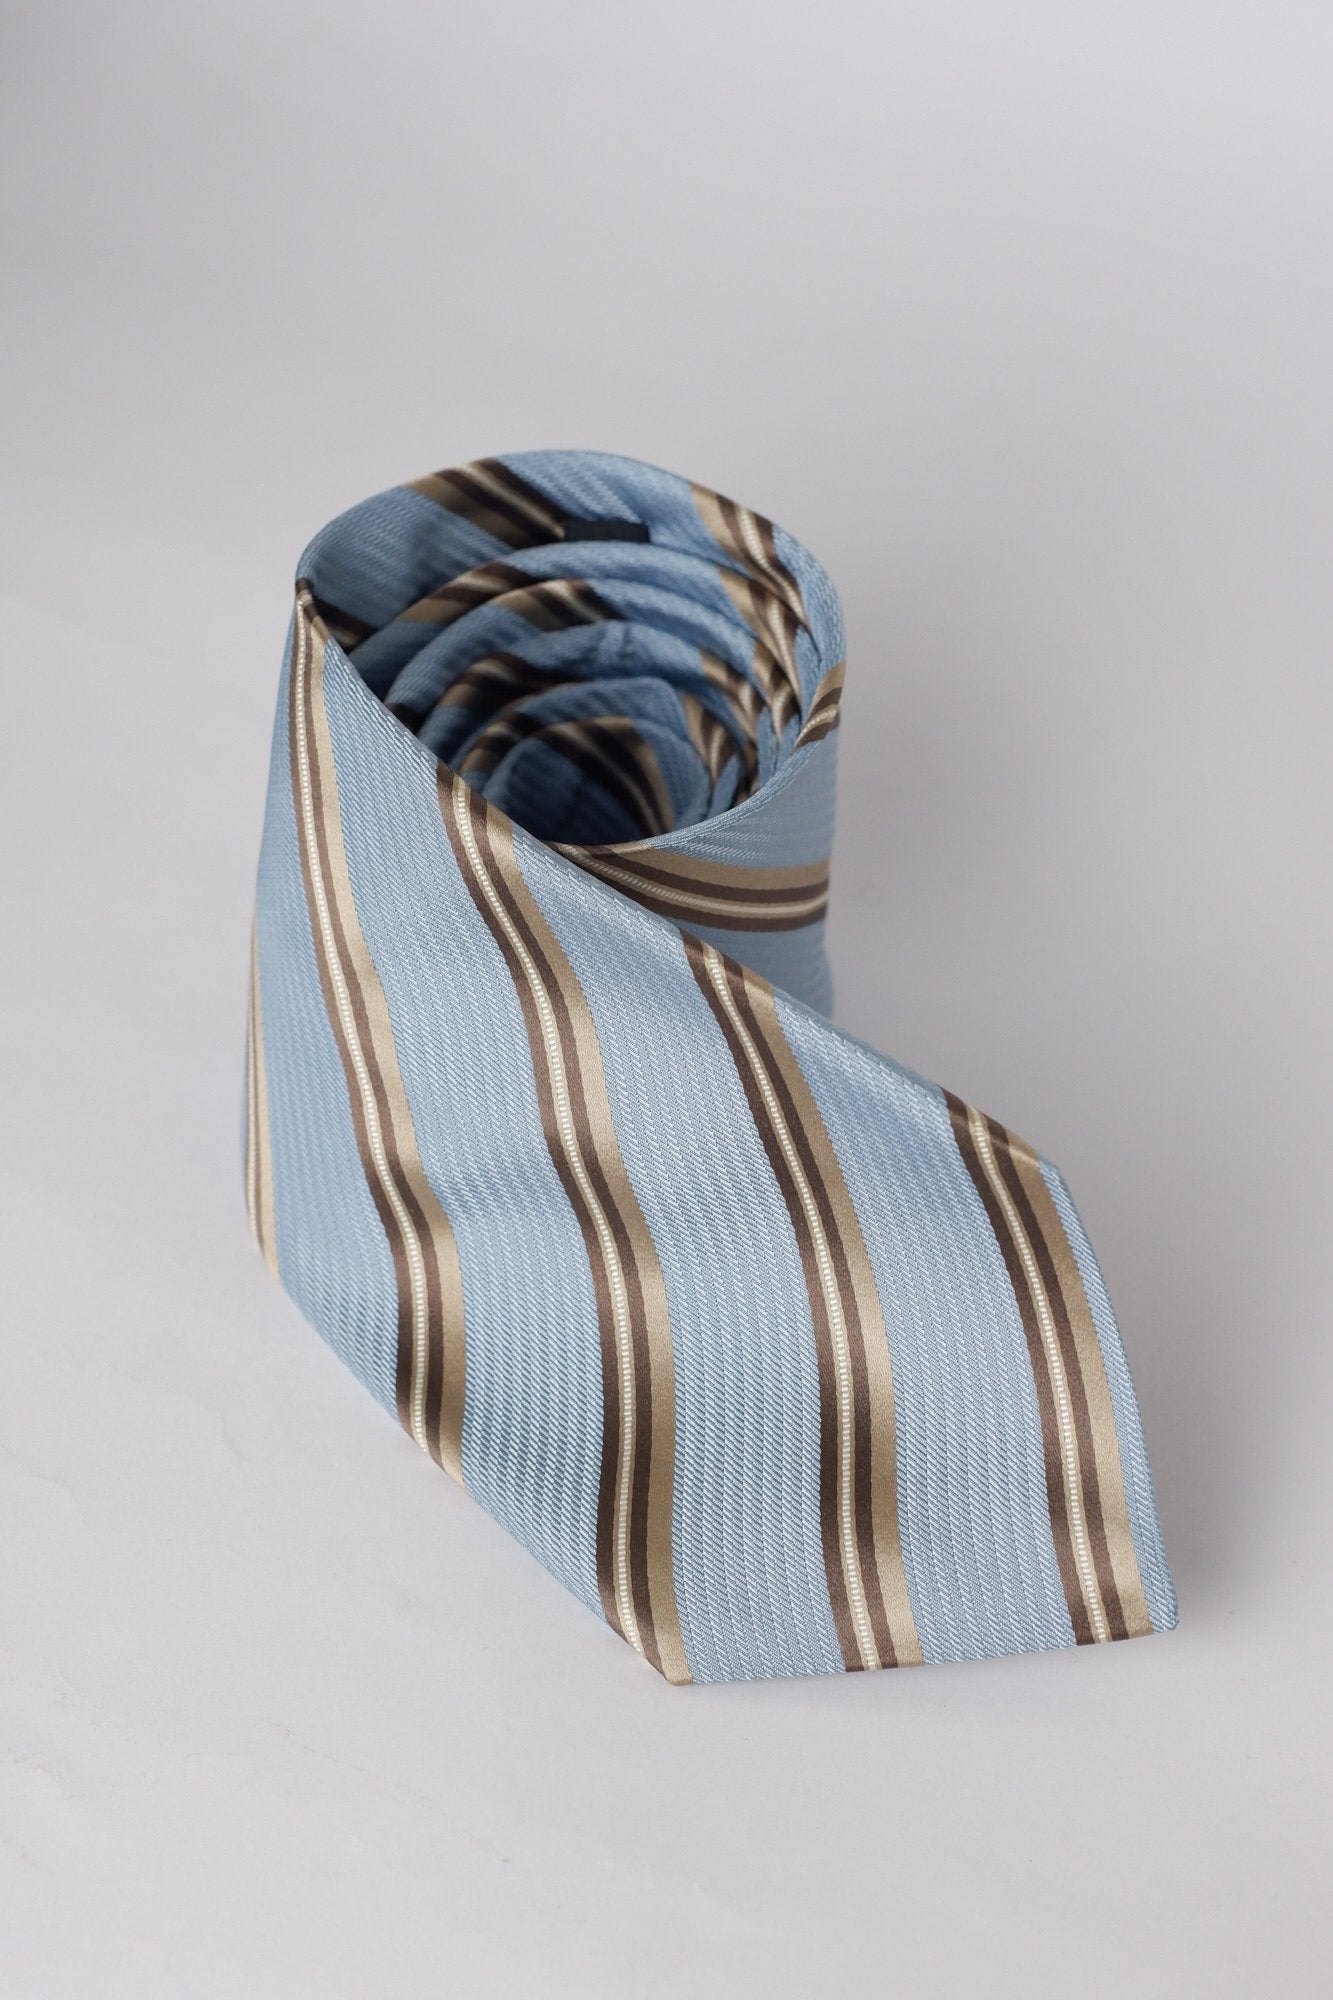 Gianfranco Ferrè Light Blue with Gold Stripes Necktie